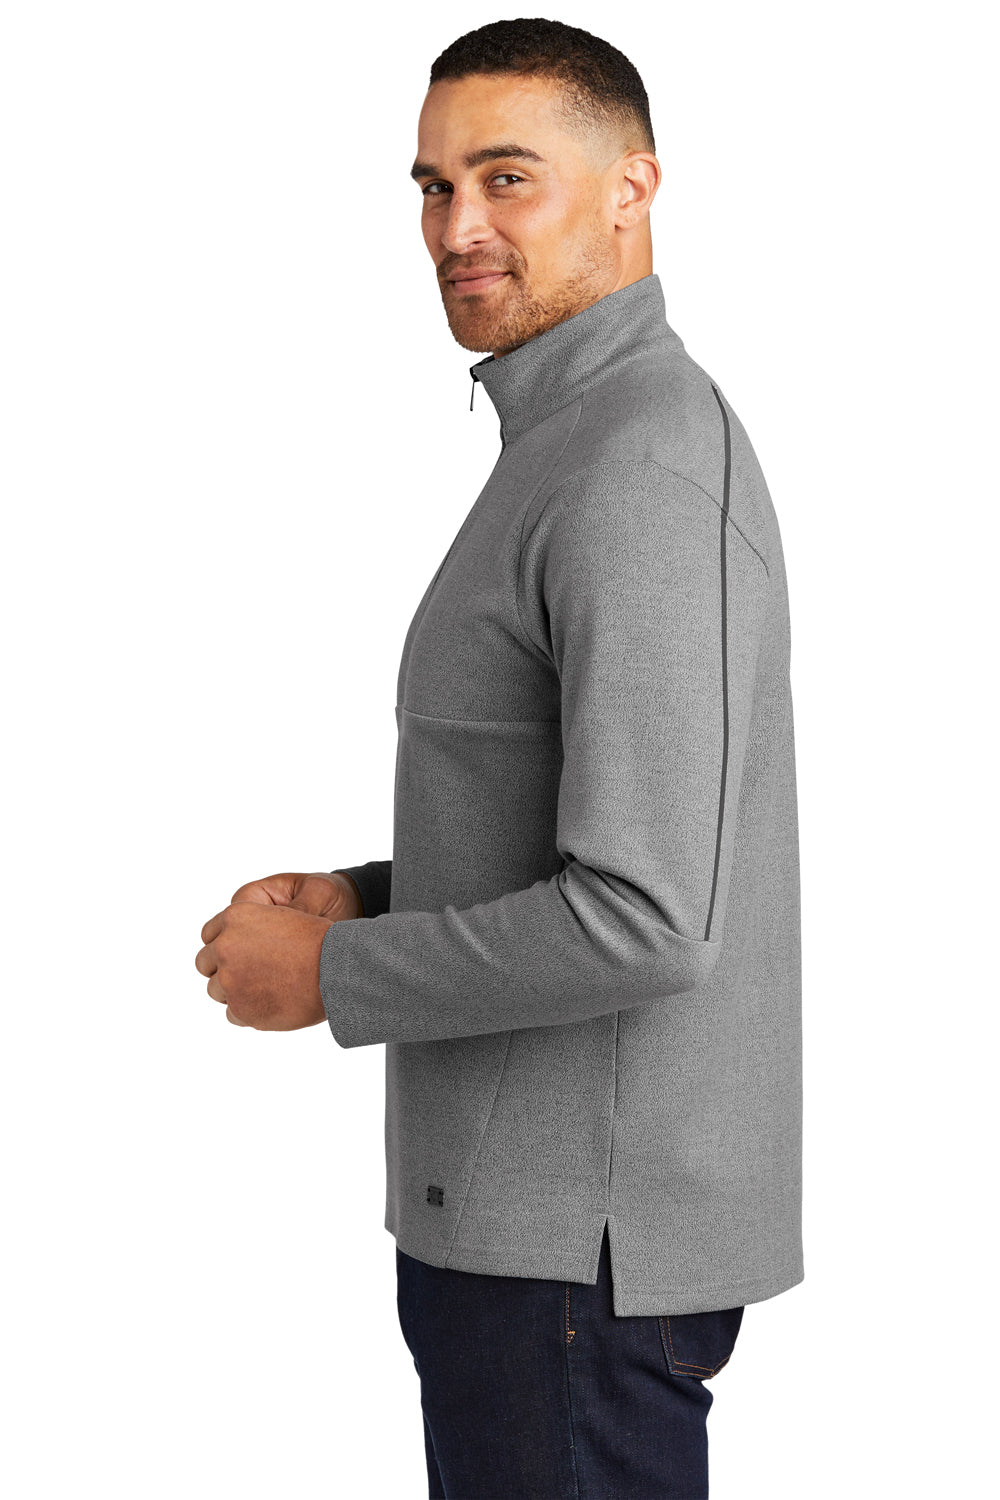 Ogio Mens Transition 1/4 Zip Sweatshirt Heather Petrol Grey Side